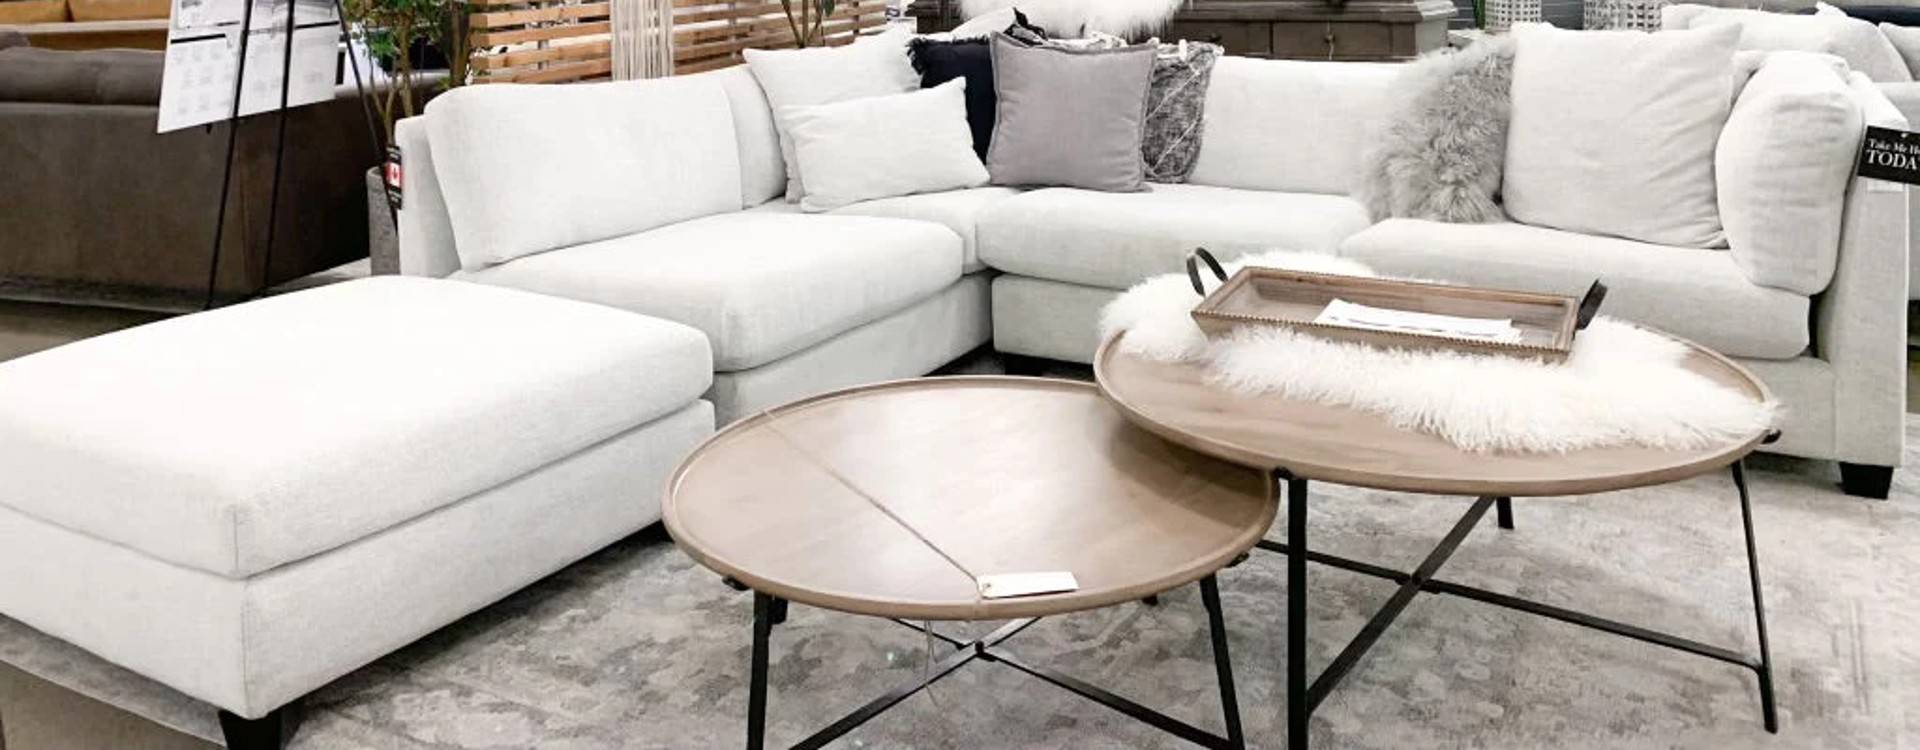 Calgary Ottomans - Discover premium Calgary sofas at modern furniture store in Calgary